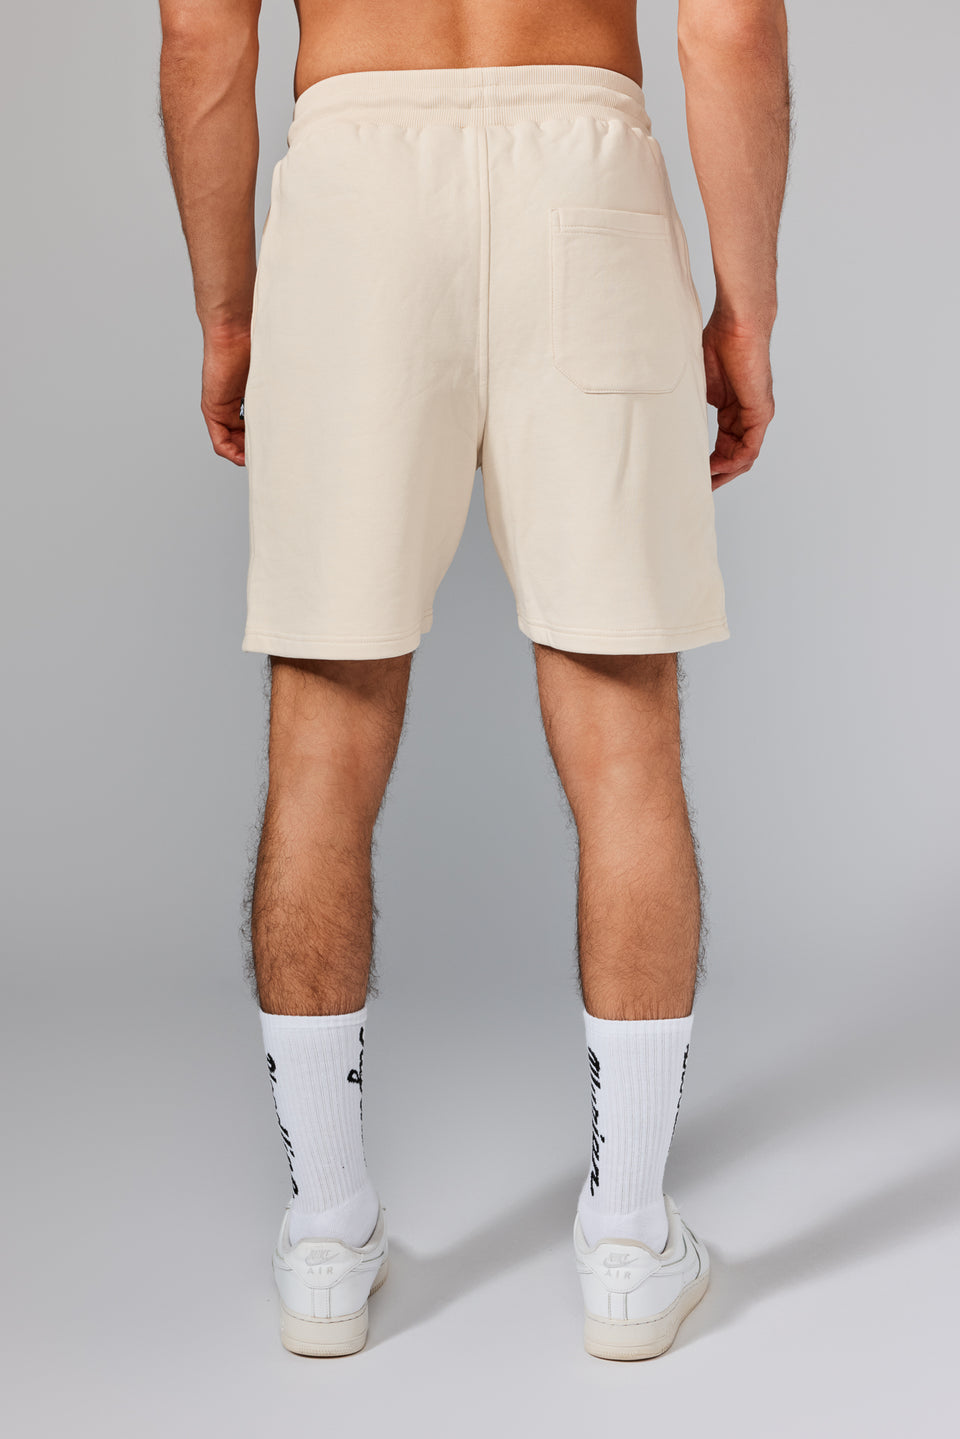 Illyrian Cotton Shorts - Ecru